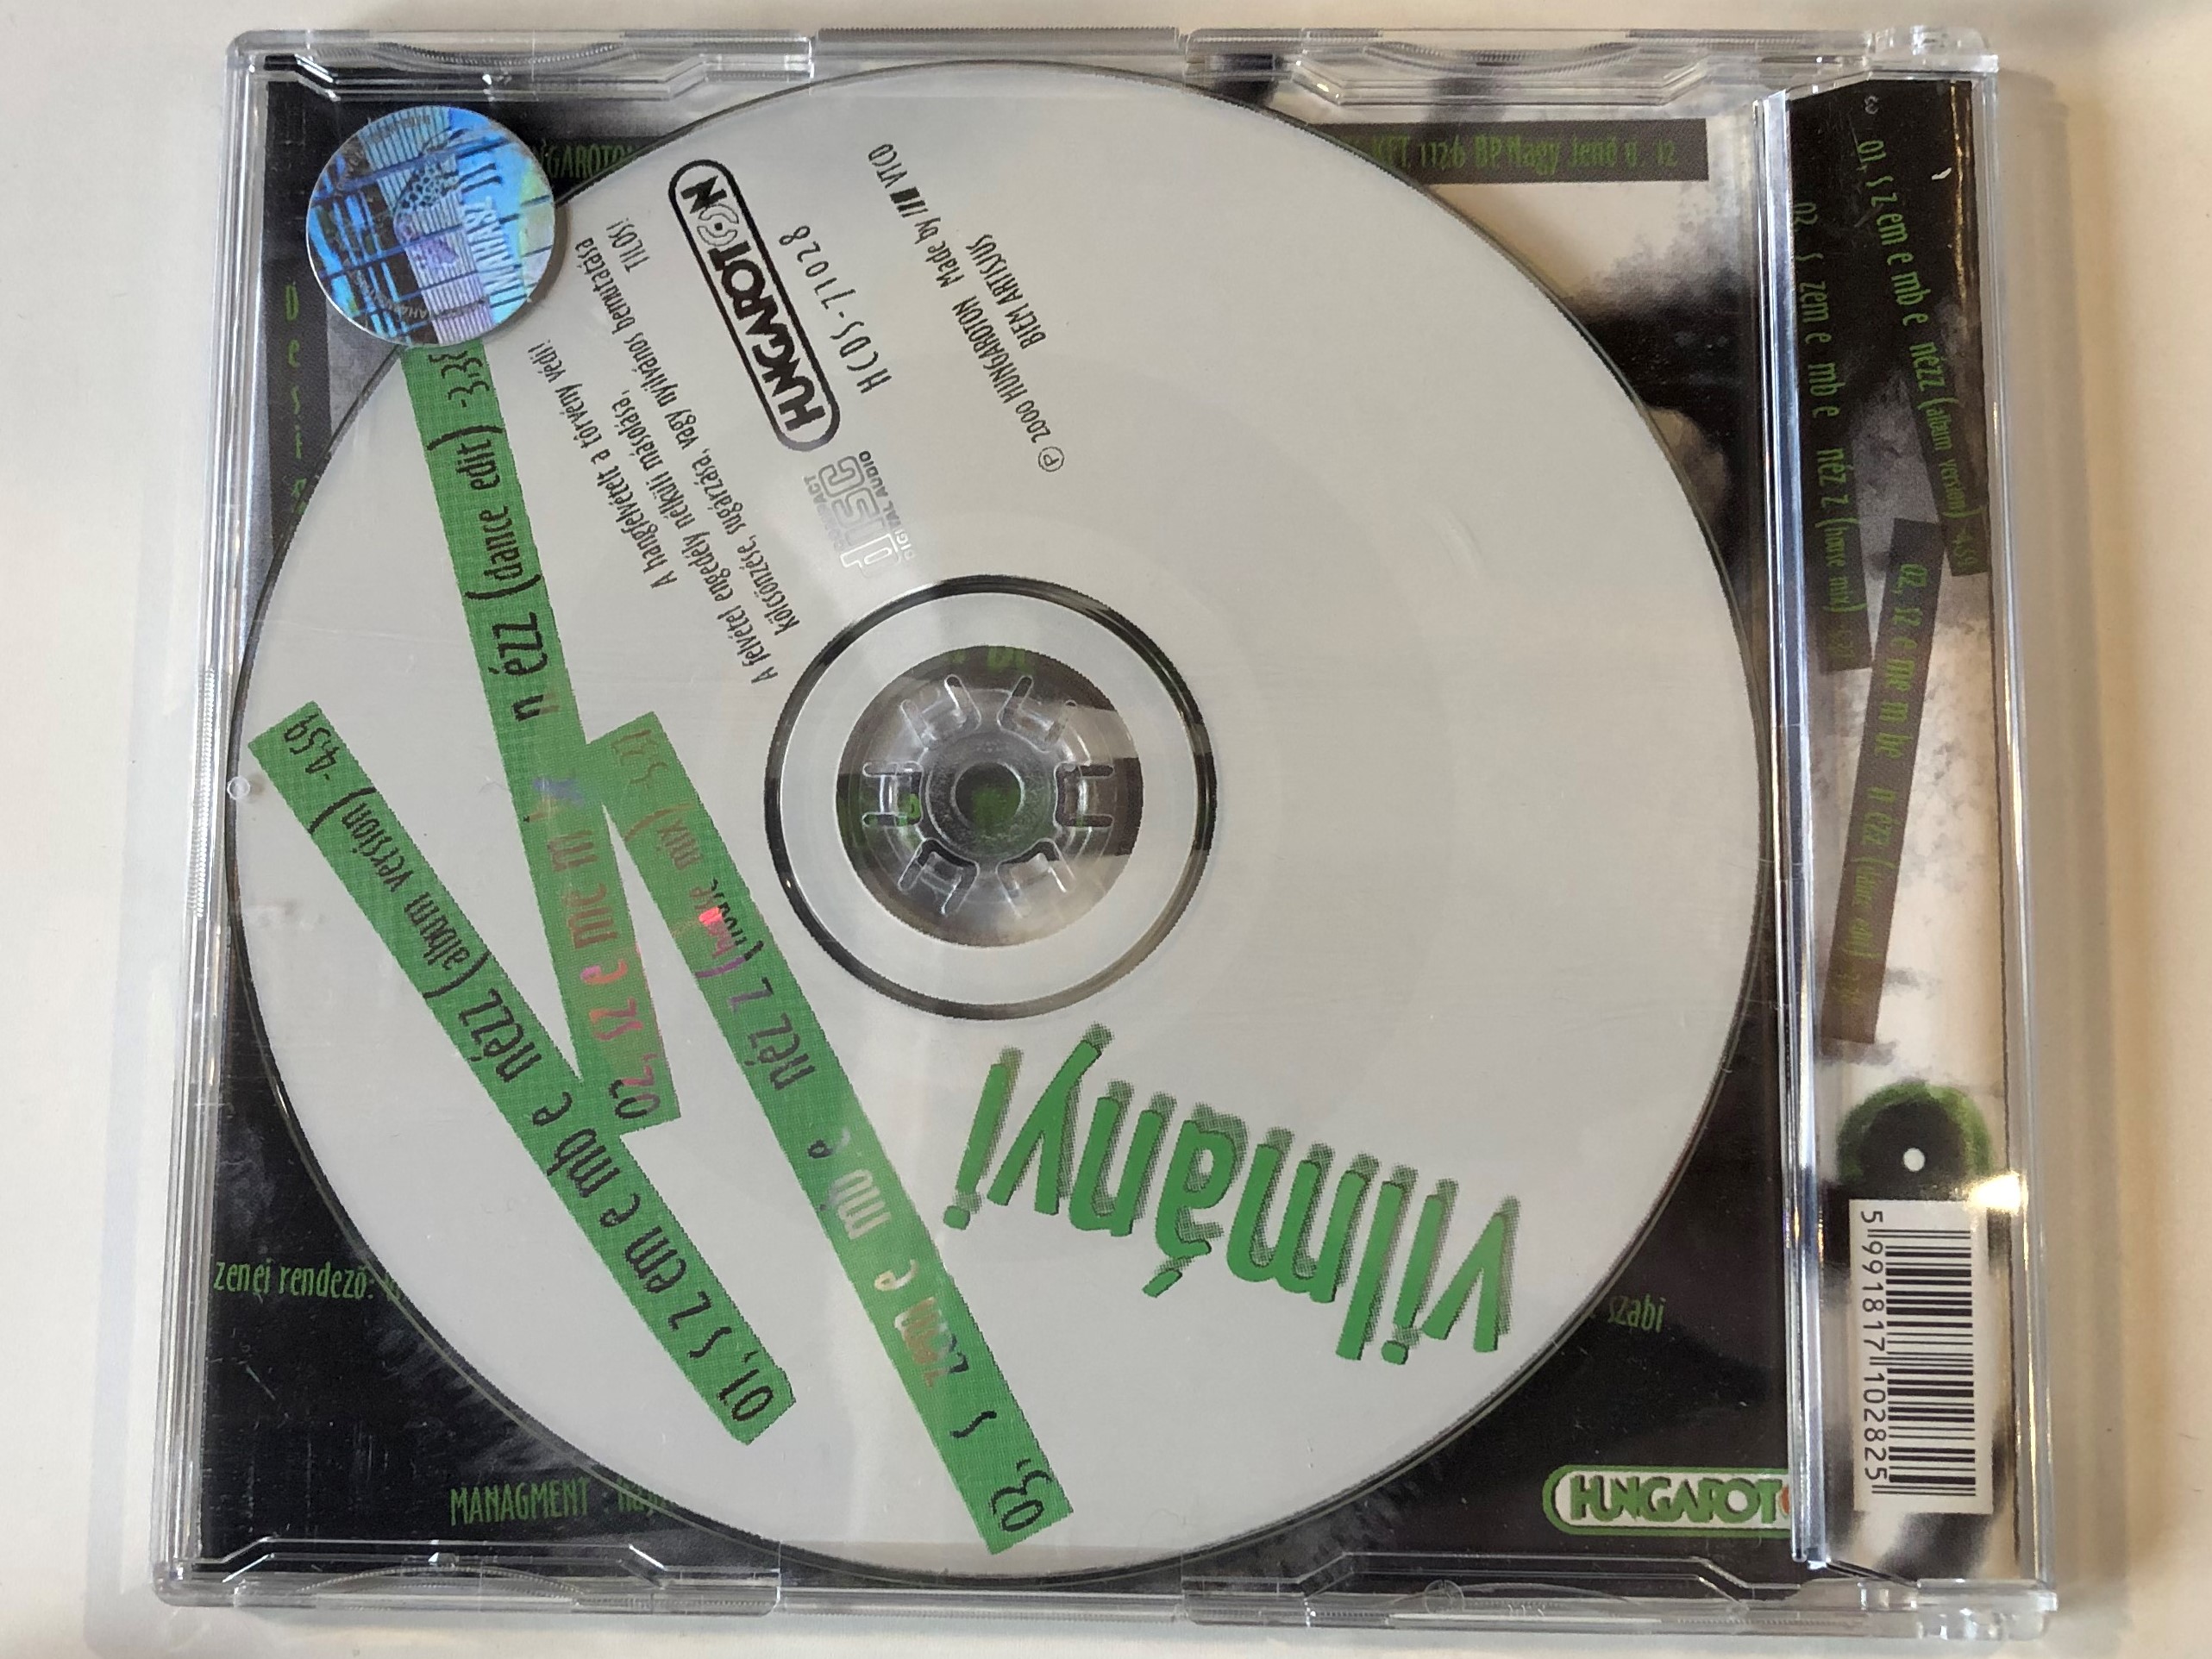 vilm-nyi-szemembe-n-zz-hungaroton-audio-cd-2000-hcds-71028-2-.jpg